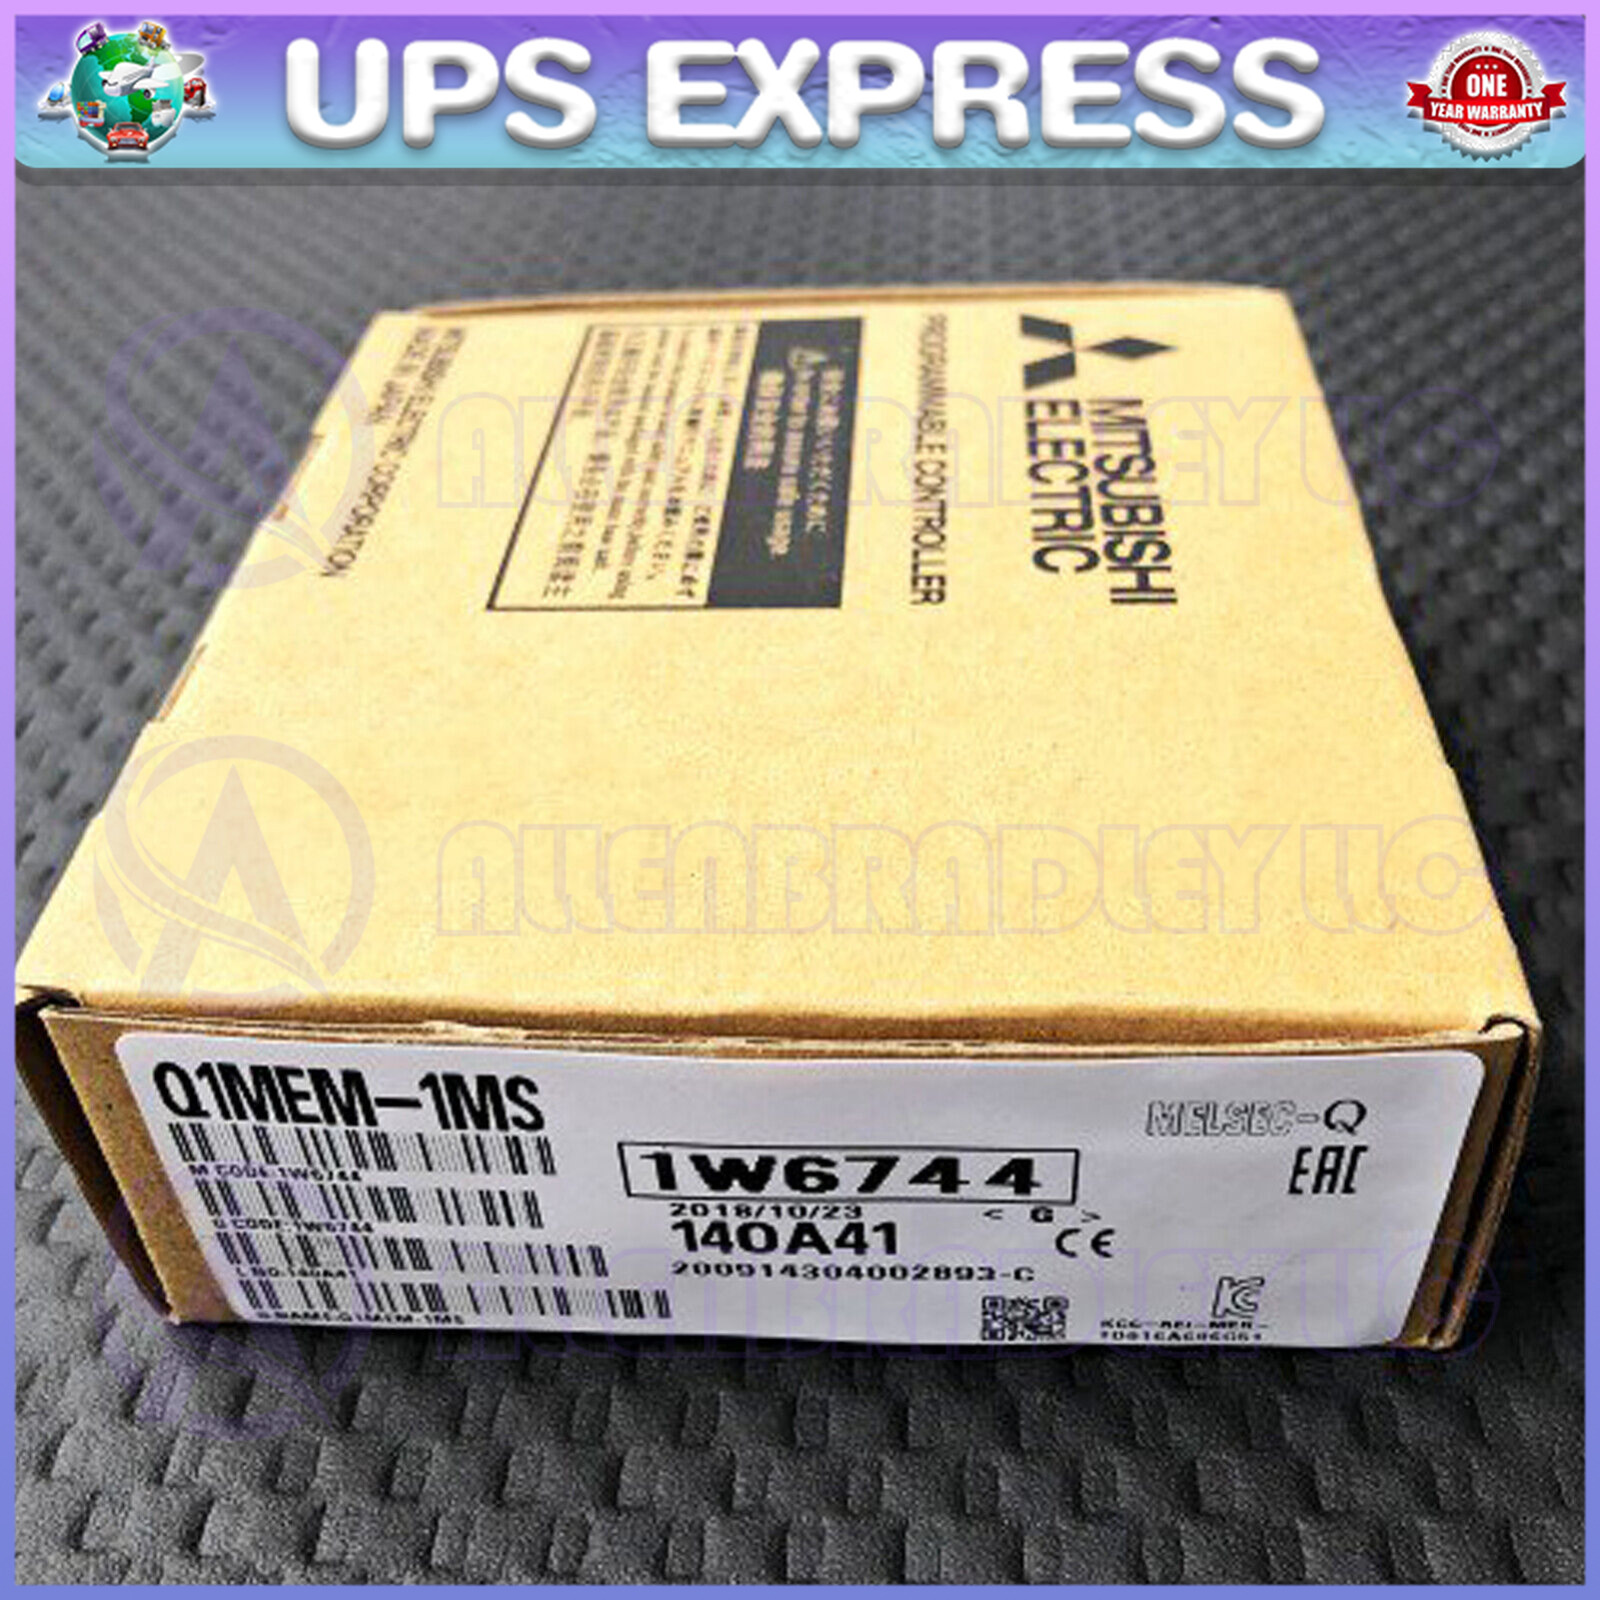 Q1MEM-1MS Mitsubishi Memory Card in Box PLC Module Expedited Shipping Q1MEM1MS